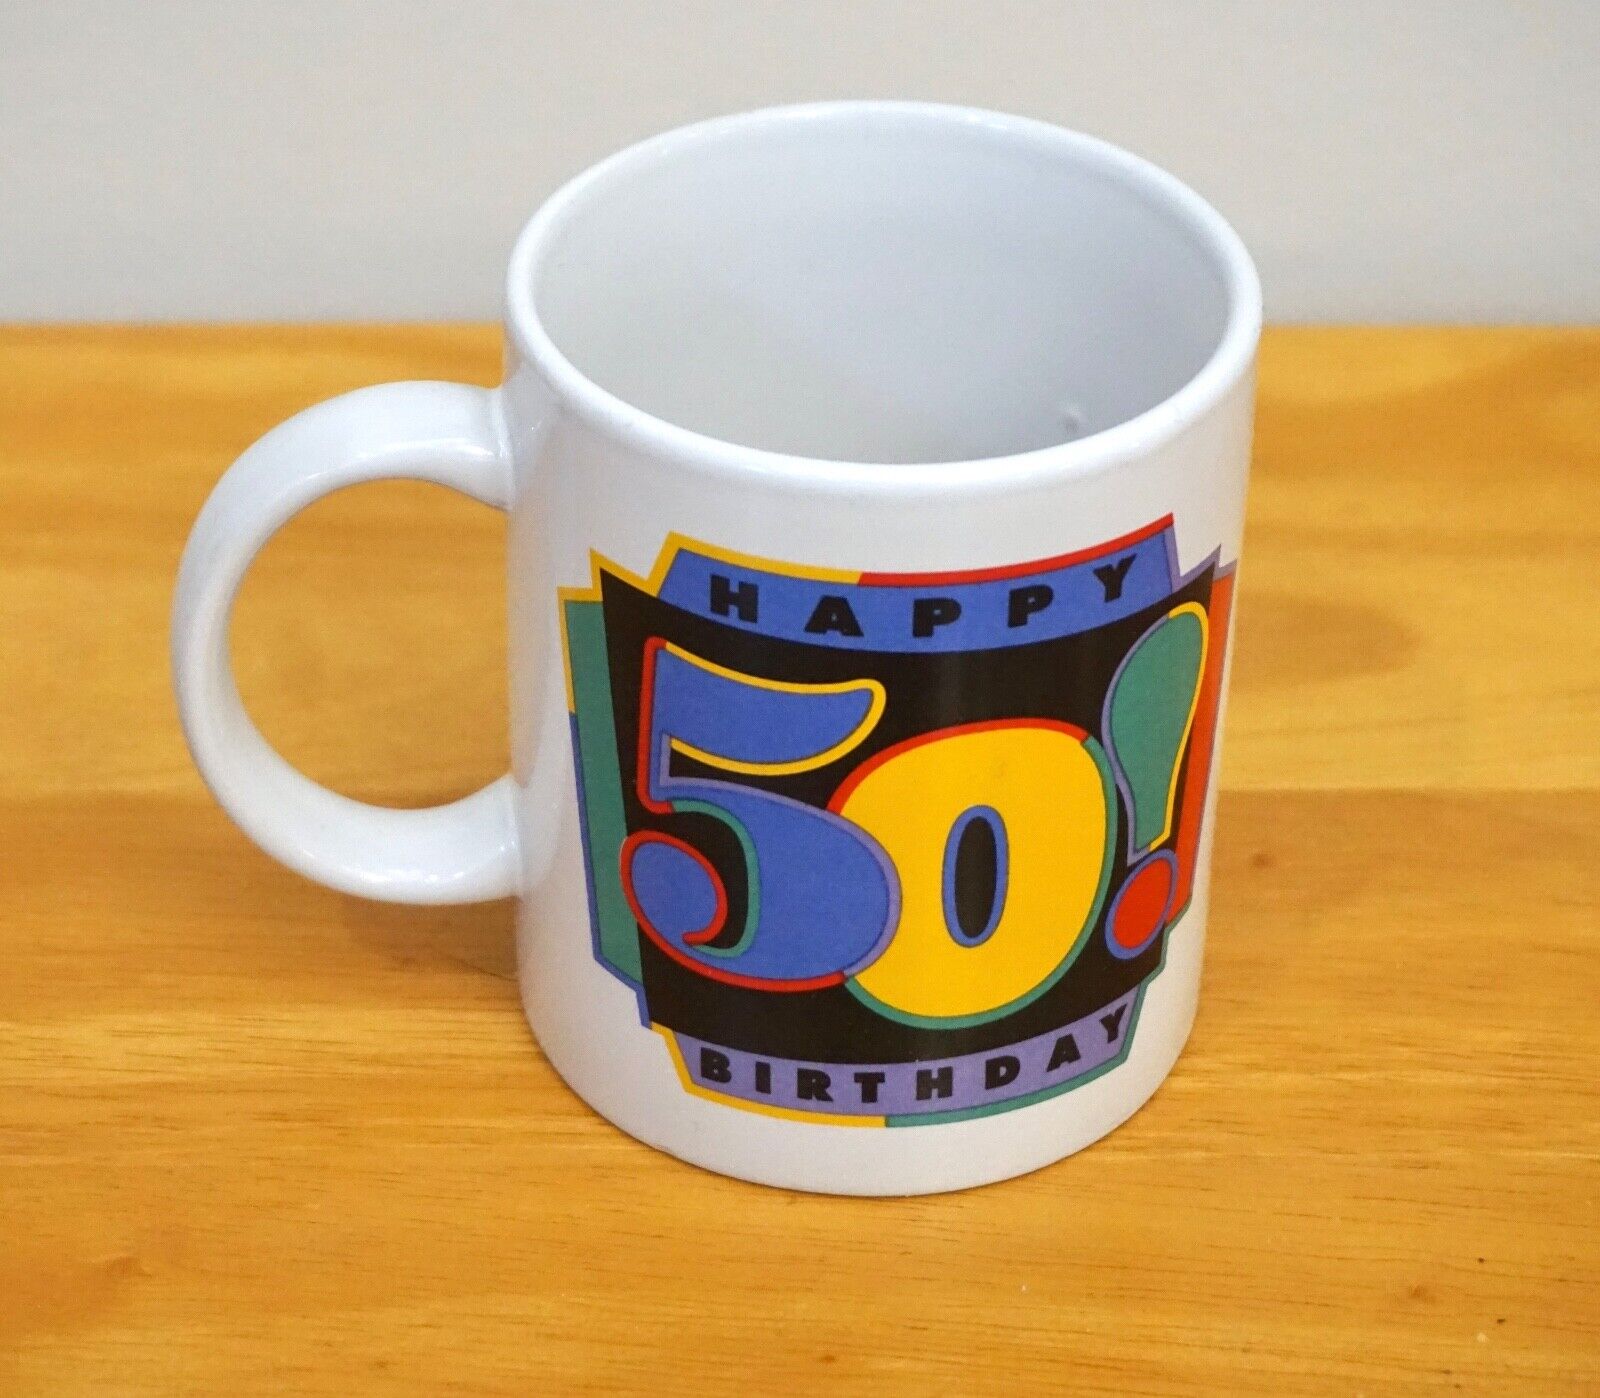 “Happy 50th Birthday” Mug, Amscan, 10 oz. Capacity